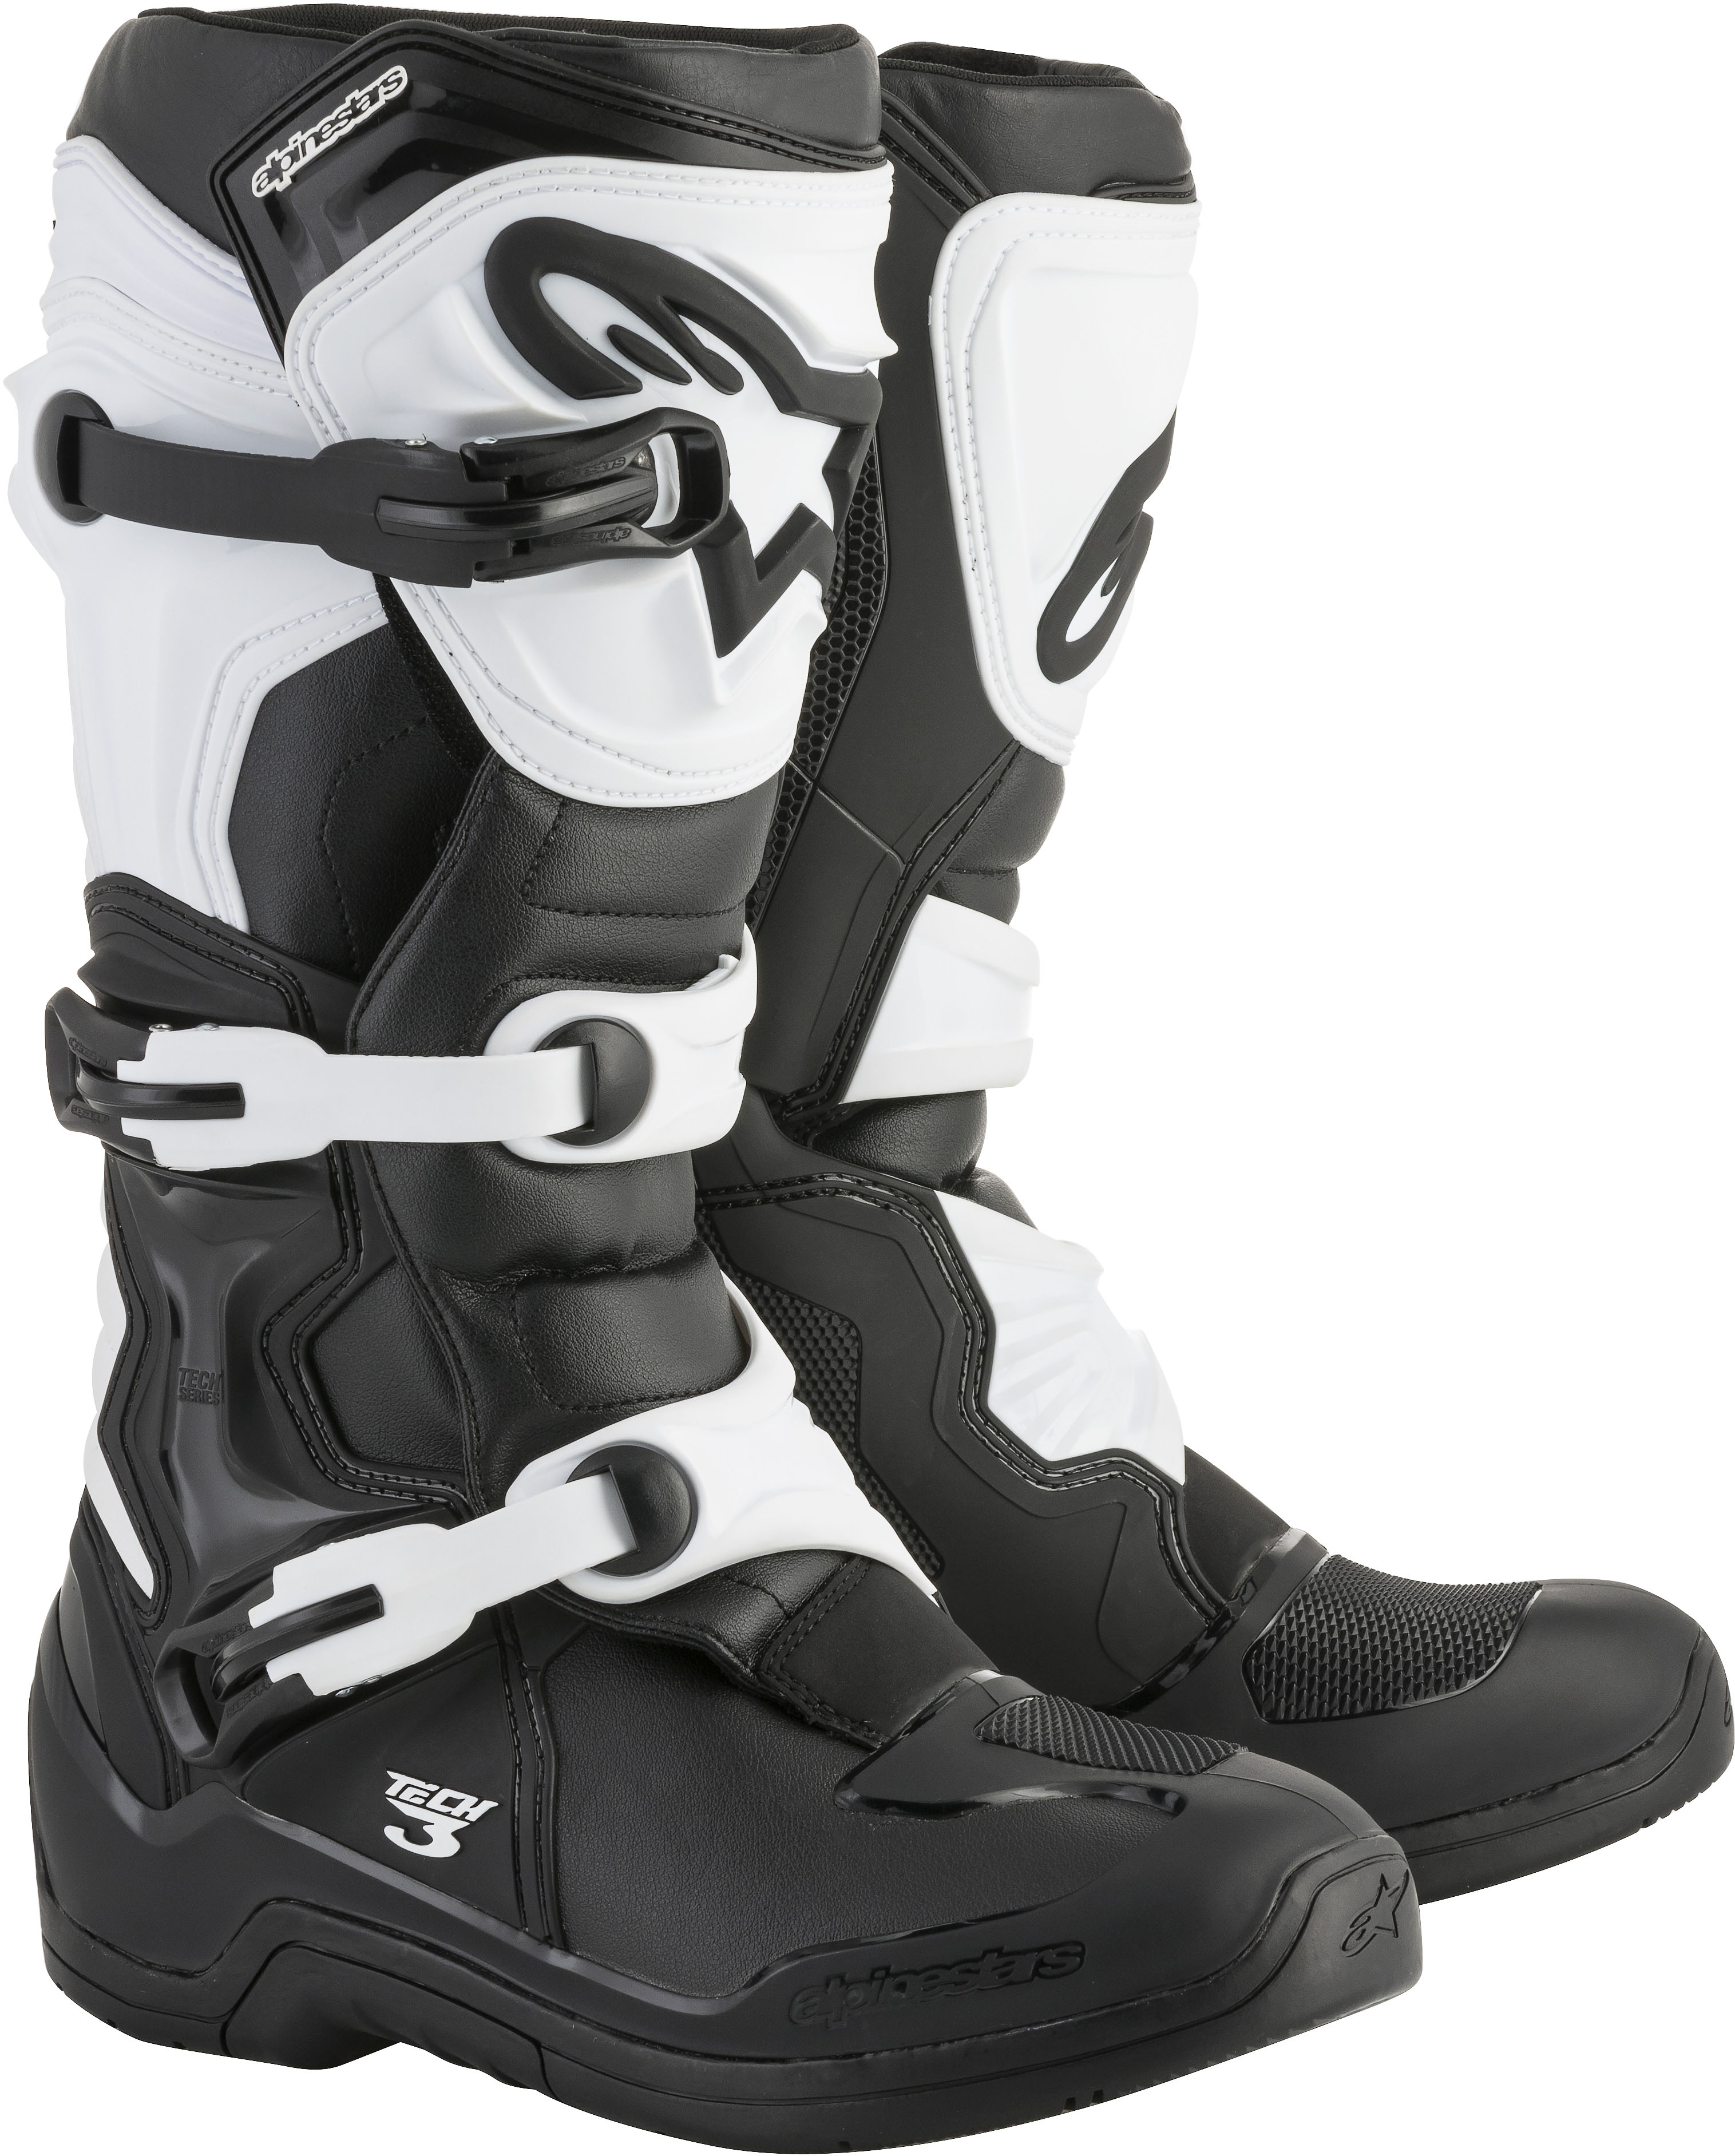 Tech 3 Boots Black/White Size 15 - Click Image to Close